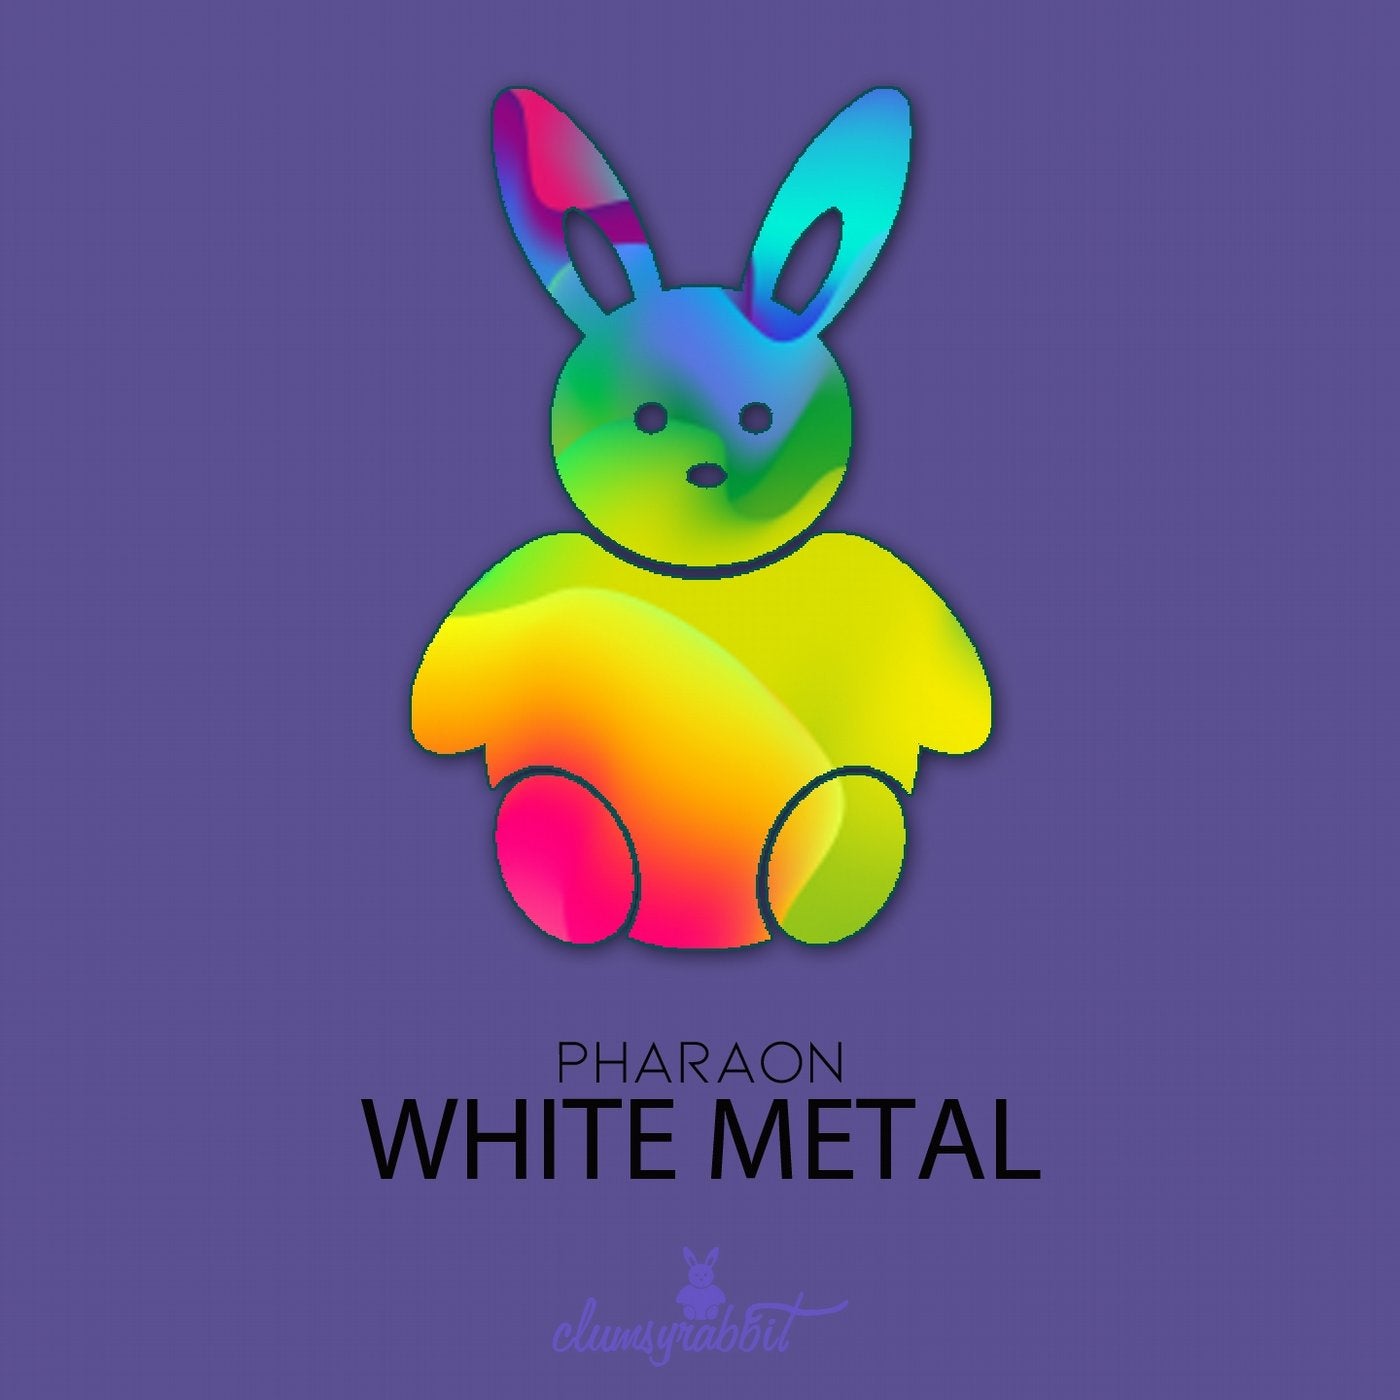 White Metal